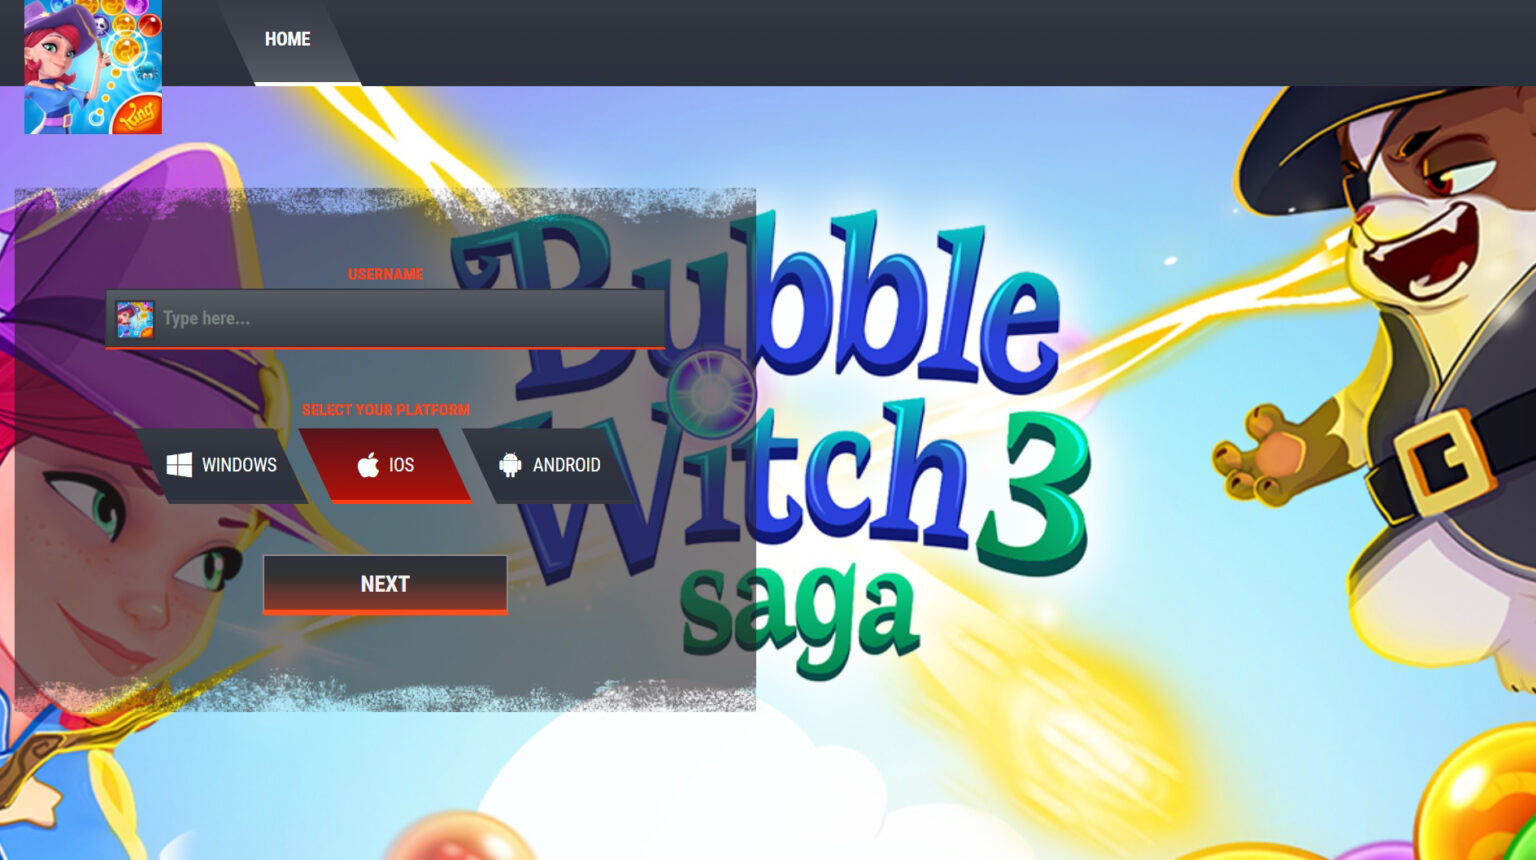 bubble witch 3 saga full mod